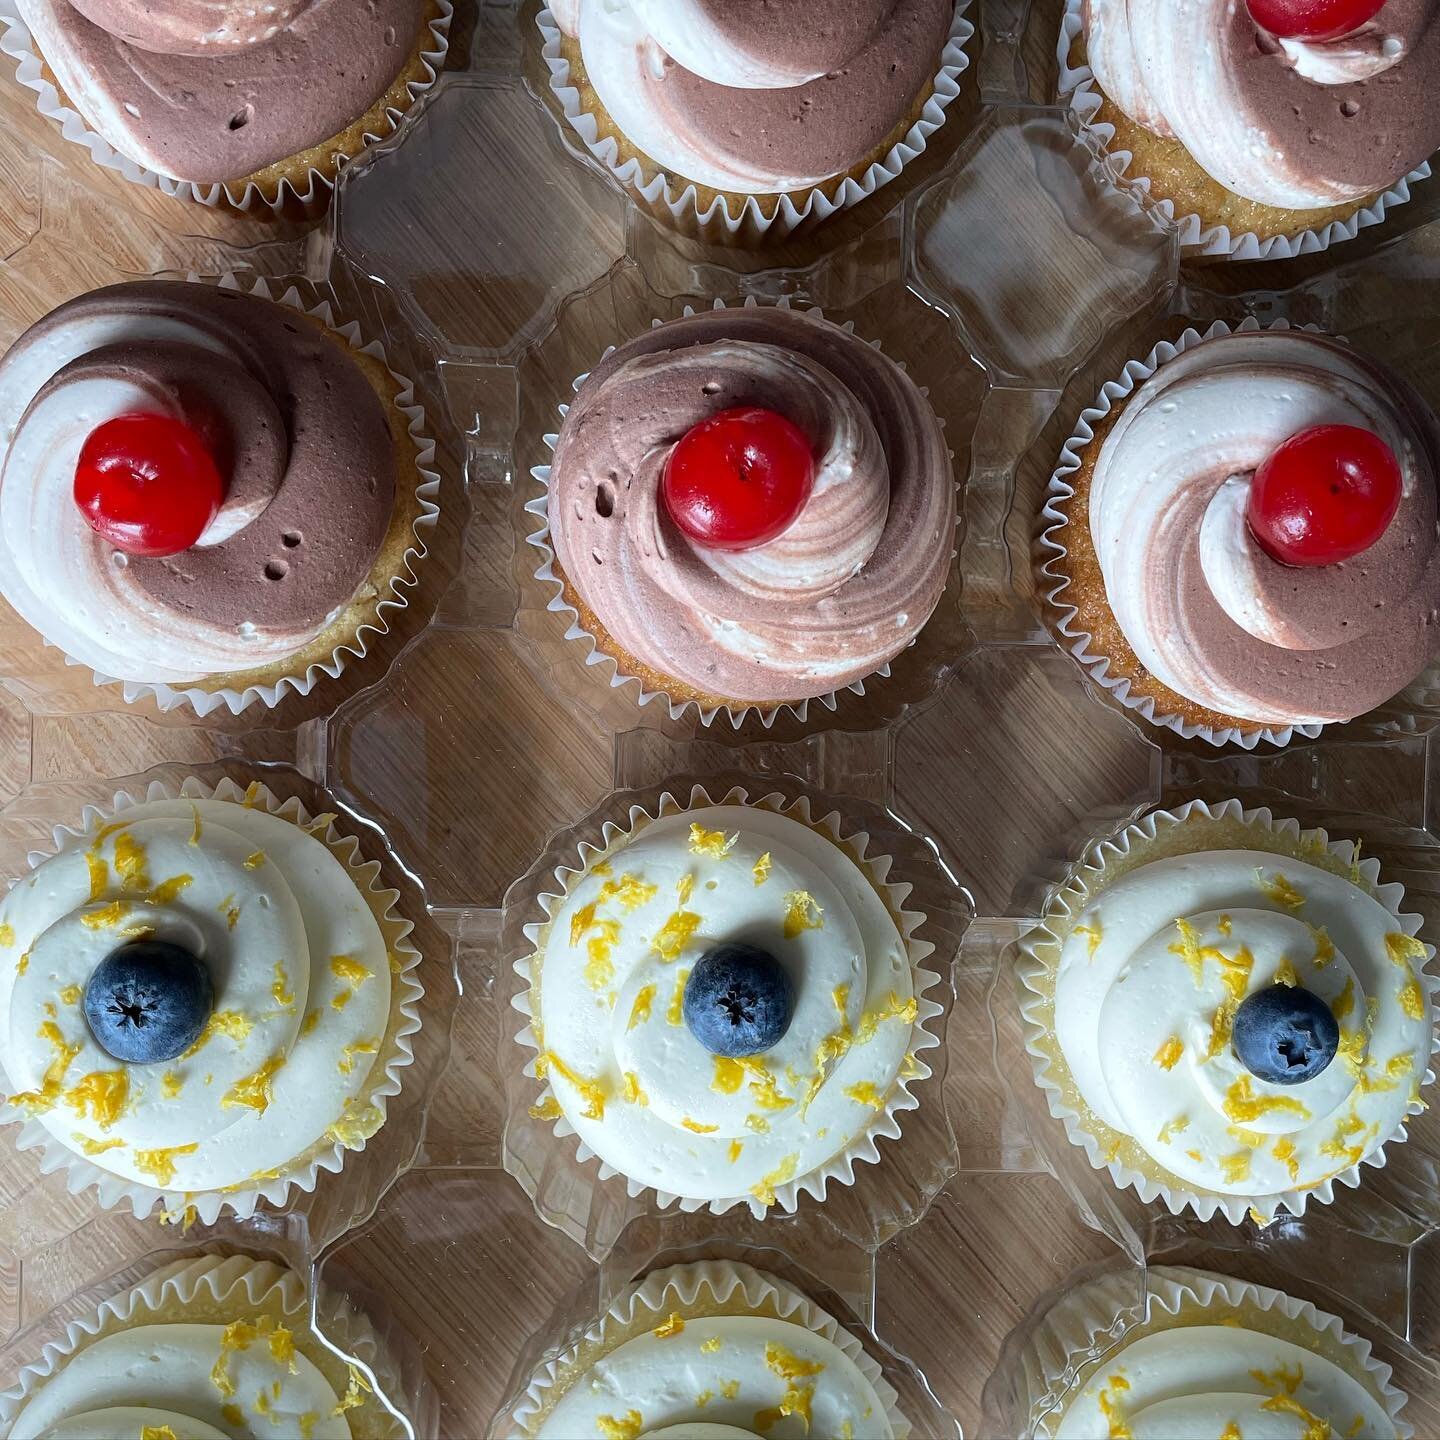 #bananasplit and #lemonblueberry cupcakes 🧁for days!

#cupcakes #cupcake #cupcakesofinstagram #cupcakesofig #lemon #blueberry #banana #nomnomnom #yummy #sweet #cuppycakes #cherry #dessert #dessertsofinstagram